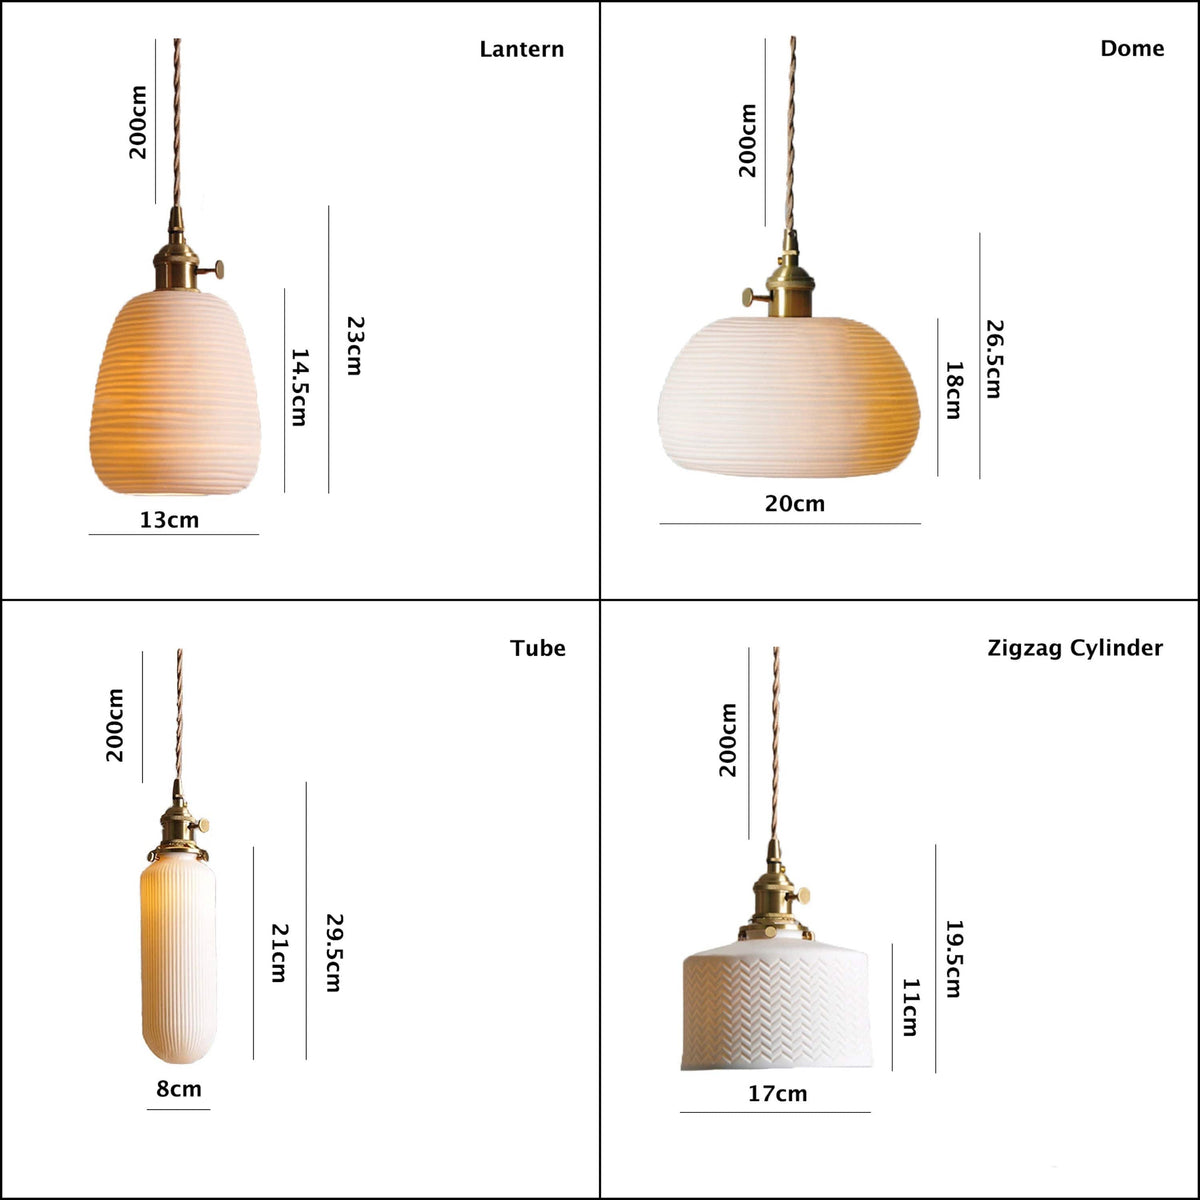 Ceramic Ribbed Pendant LED Light in Japanese Short Cylinder Shape - Bulb Included